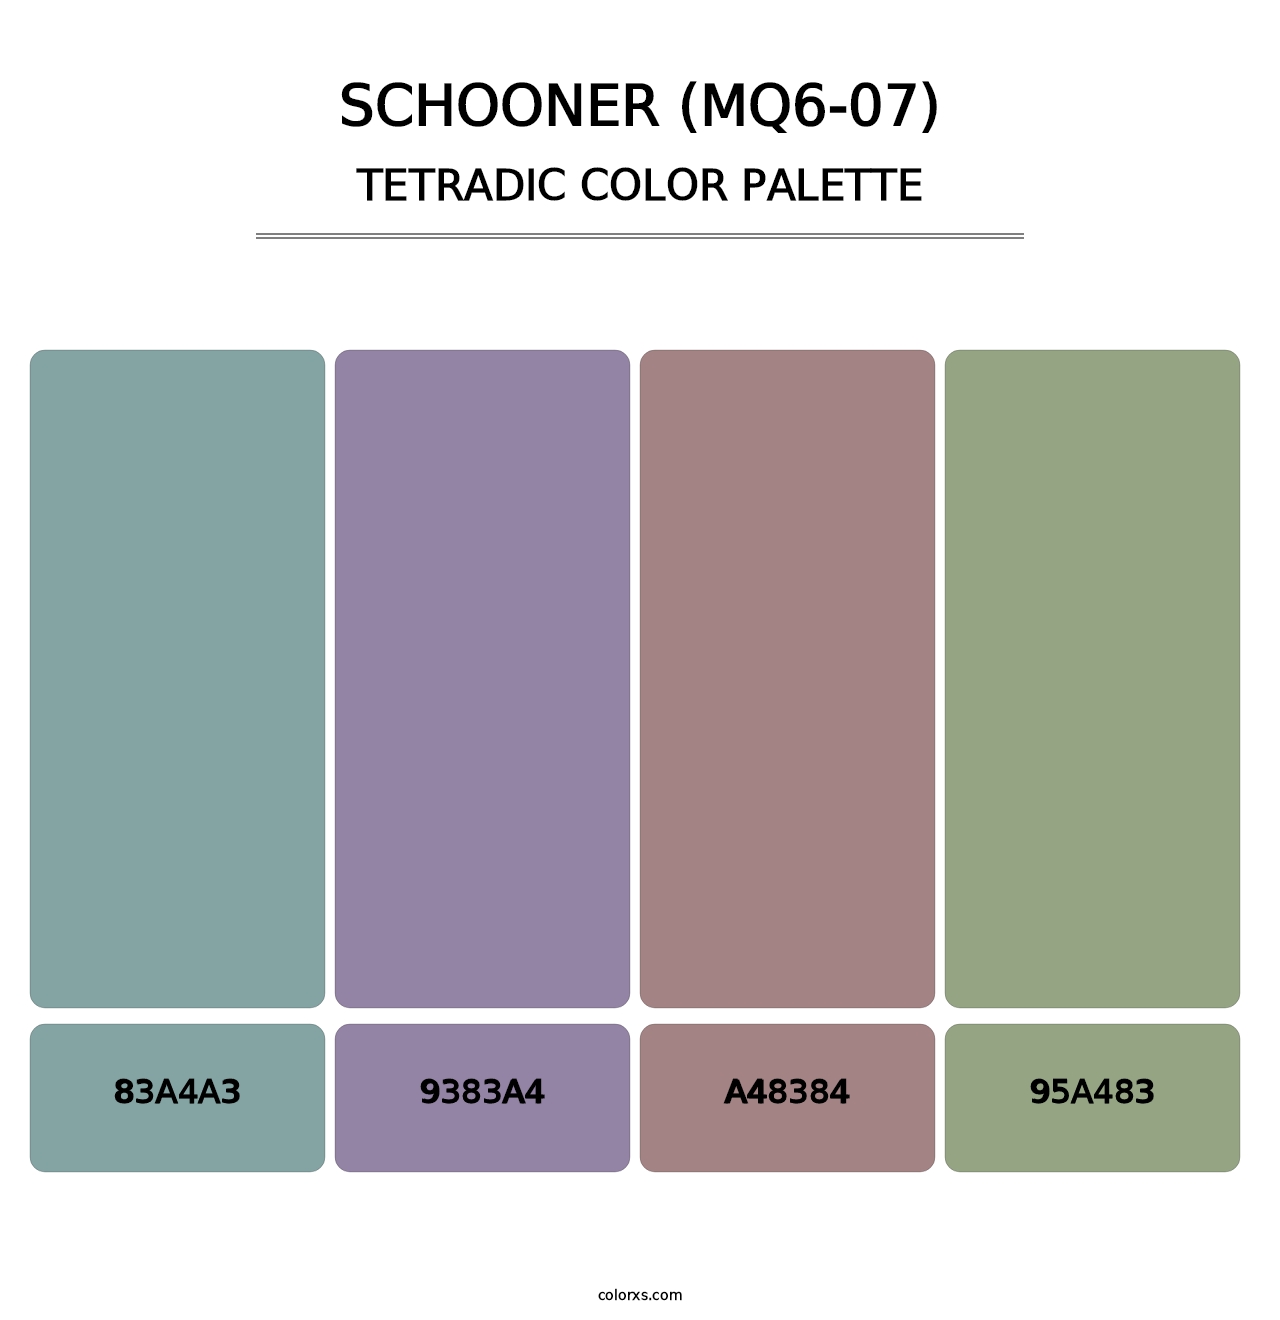 Schooner (MQ6-07) - Tetradic Color Palette